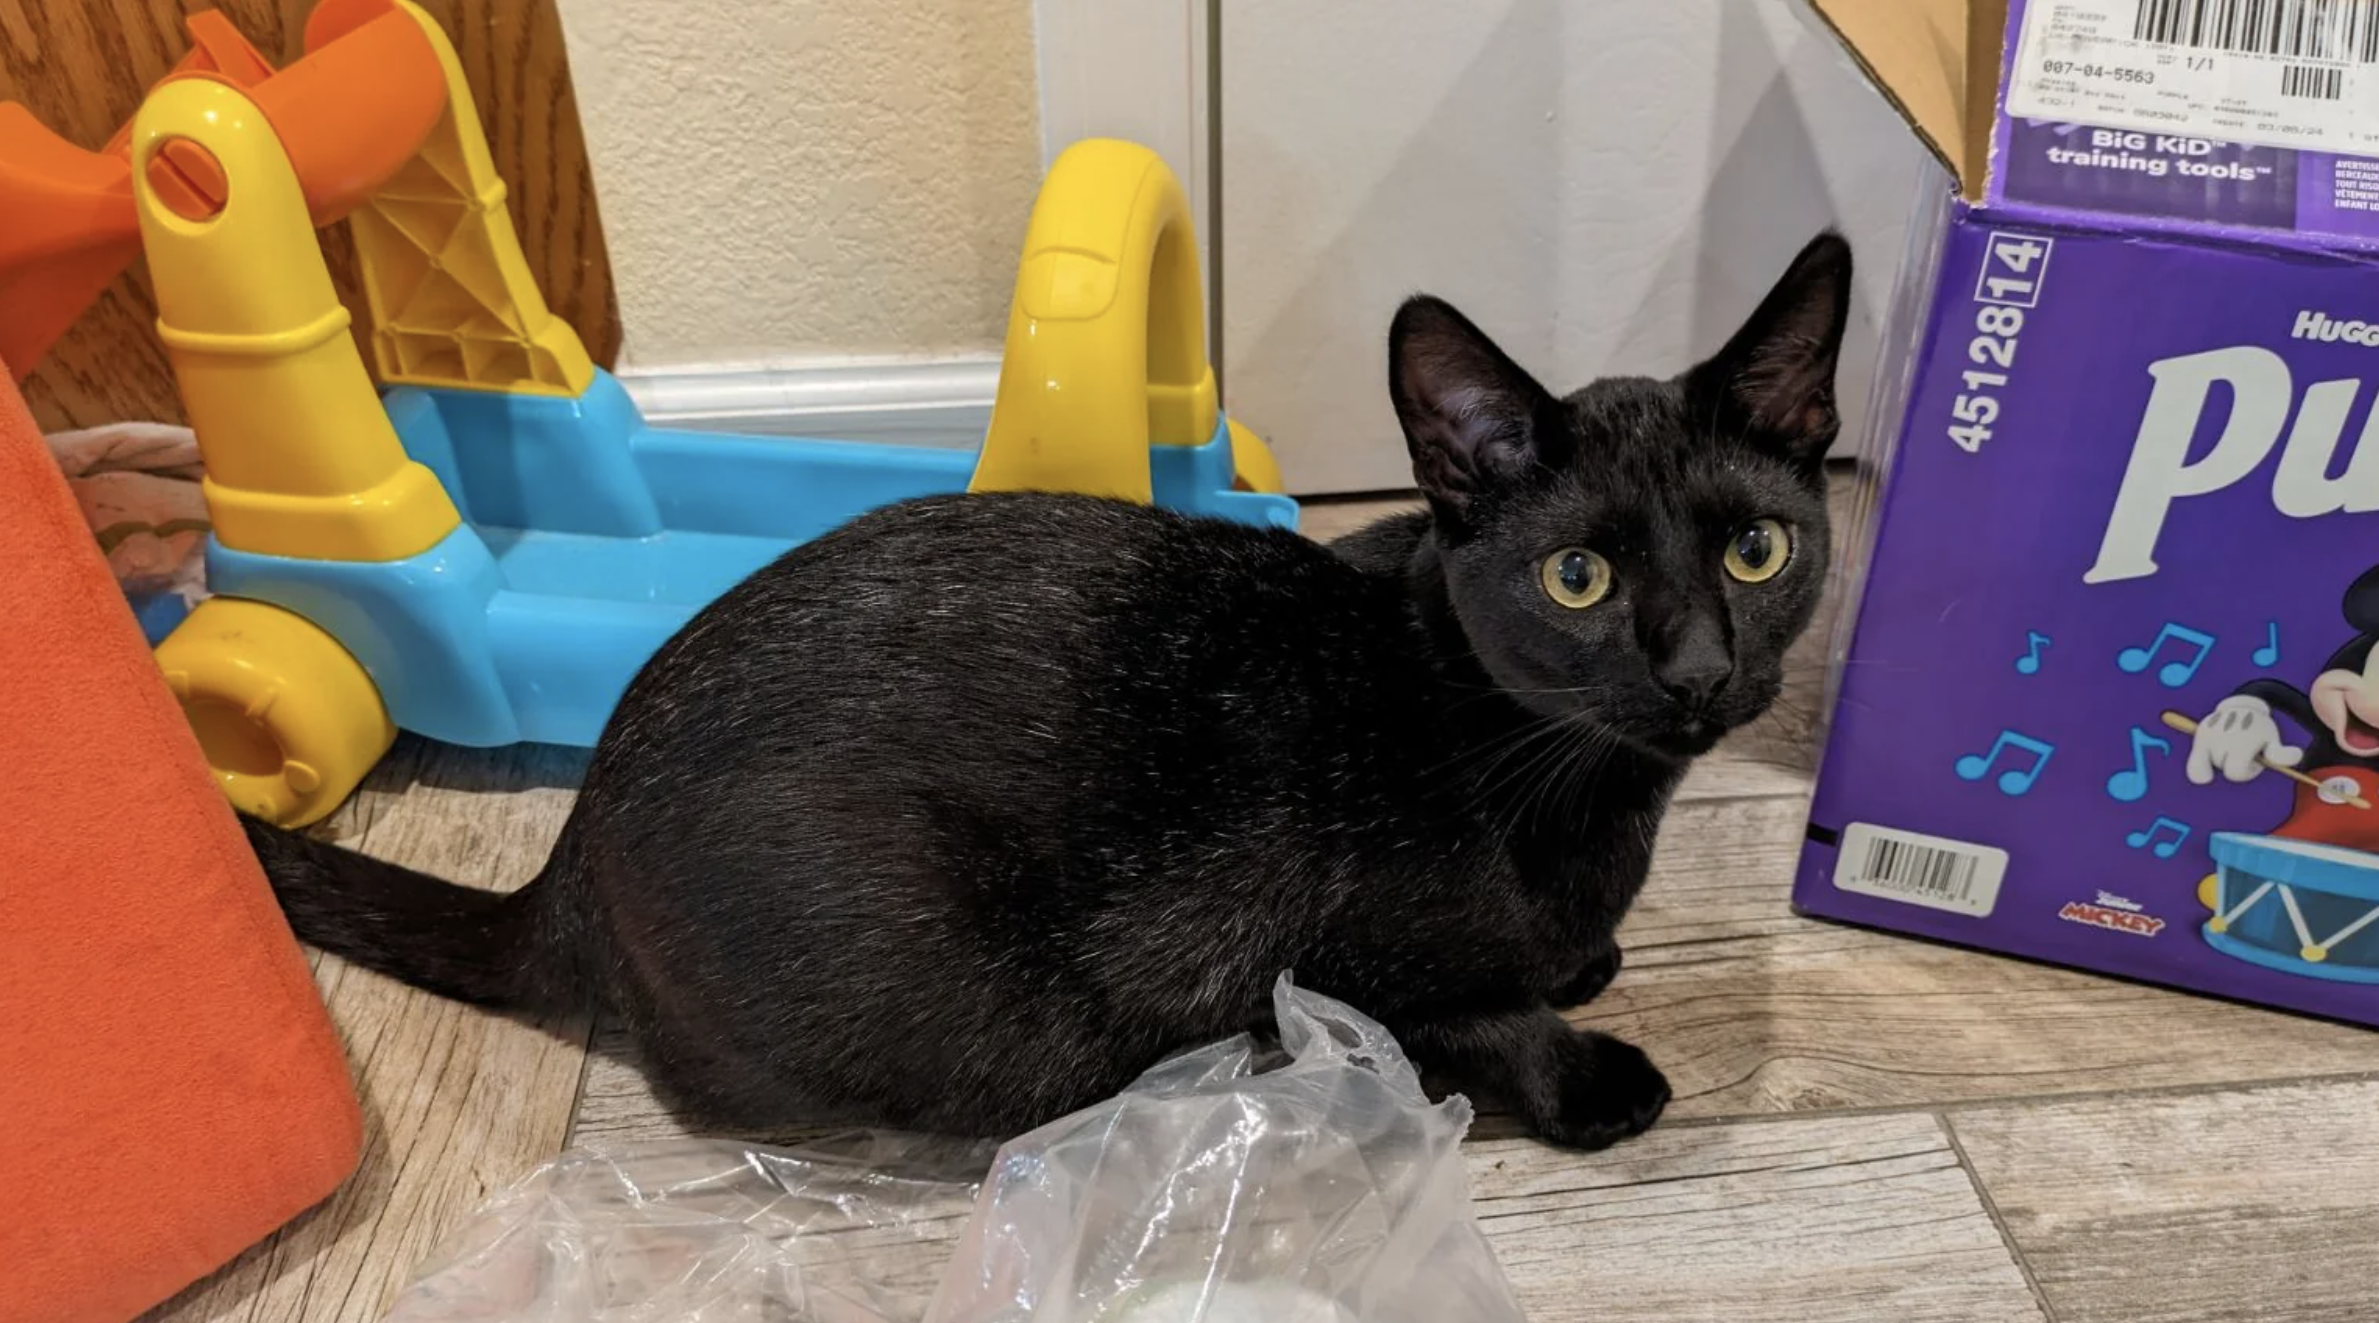 Black cat sitting next to plastic toys on the floor